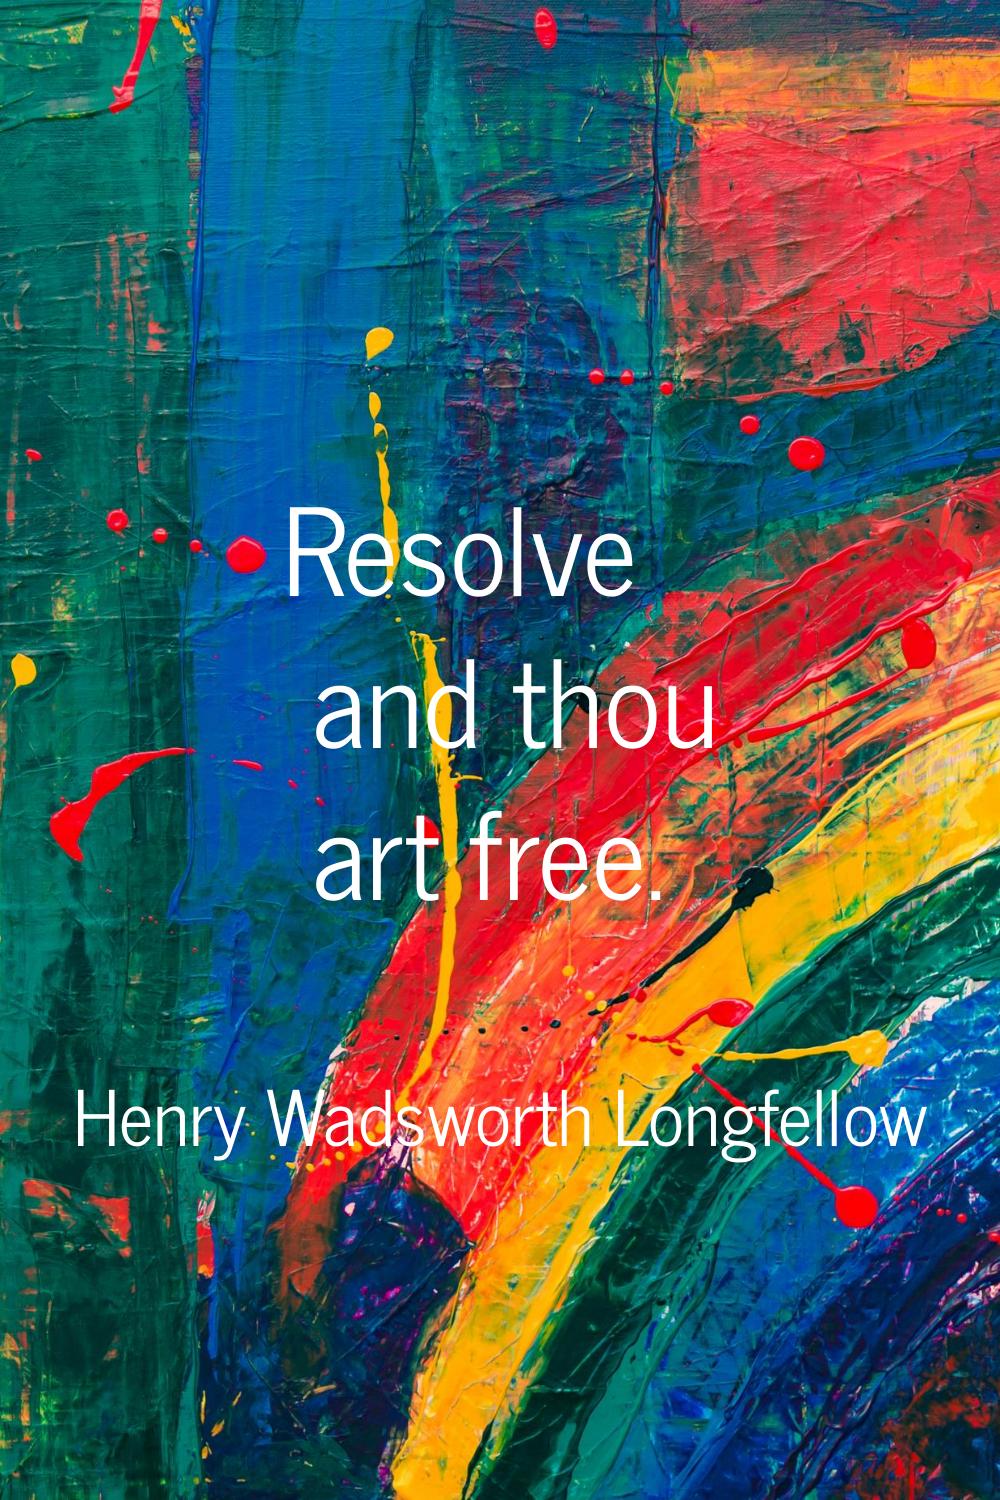 Resolve and thou art free.